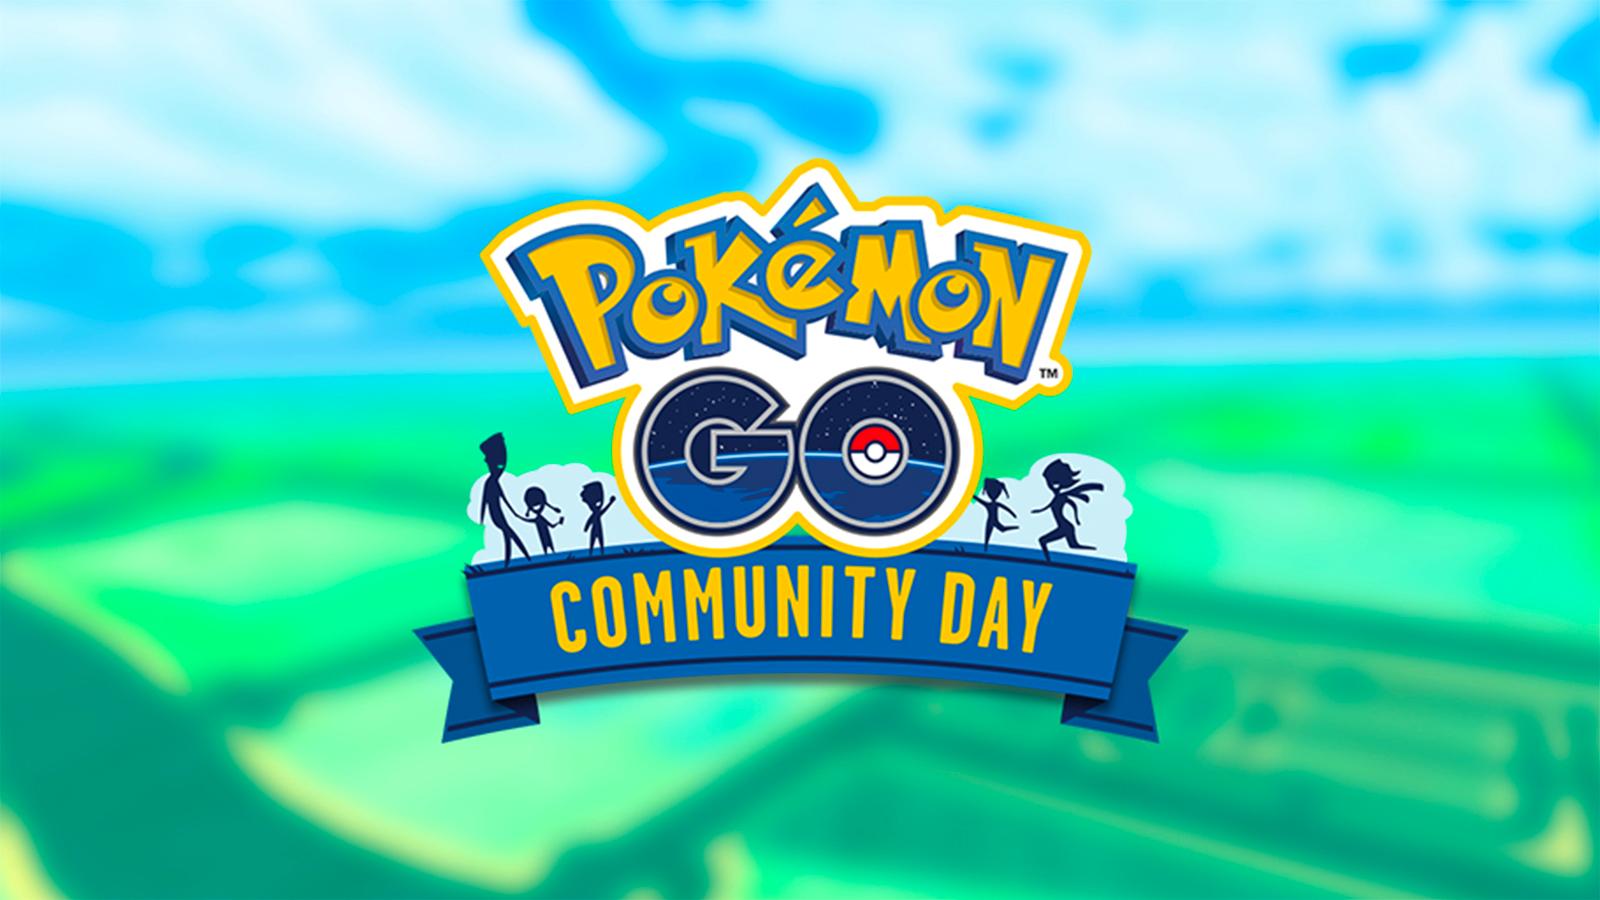 A poster for Pokemon Go Community Days